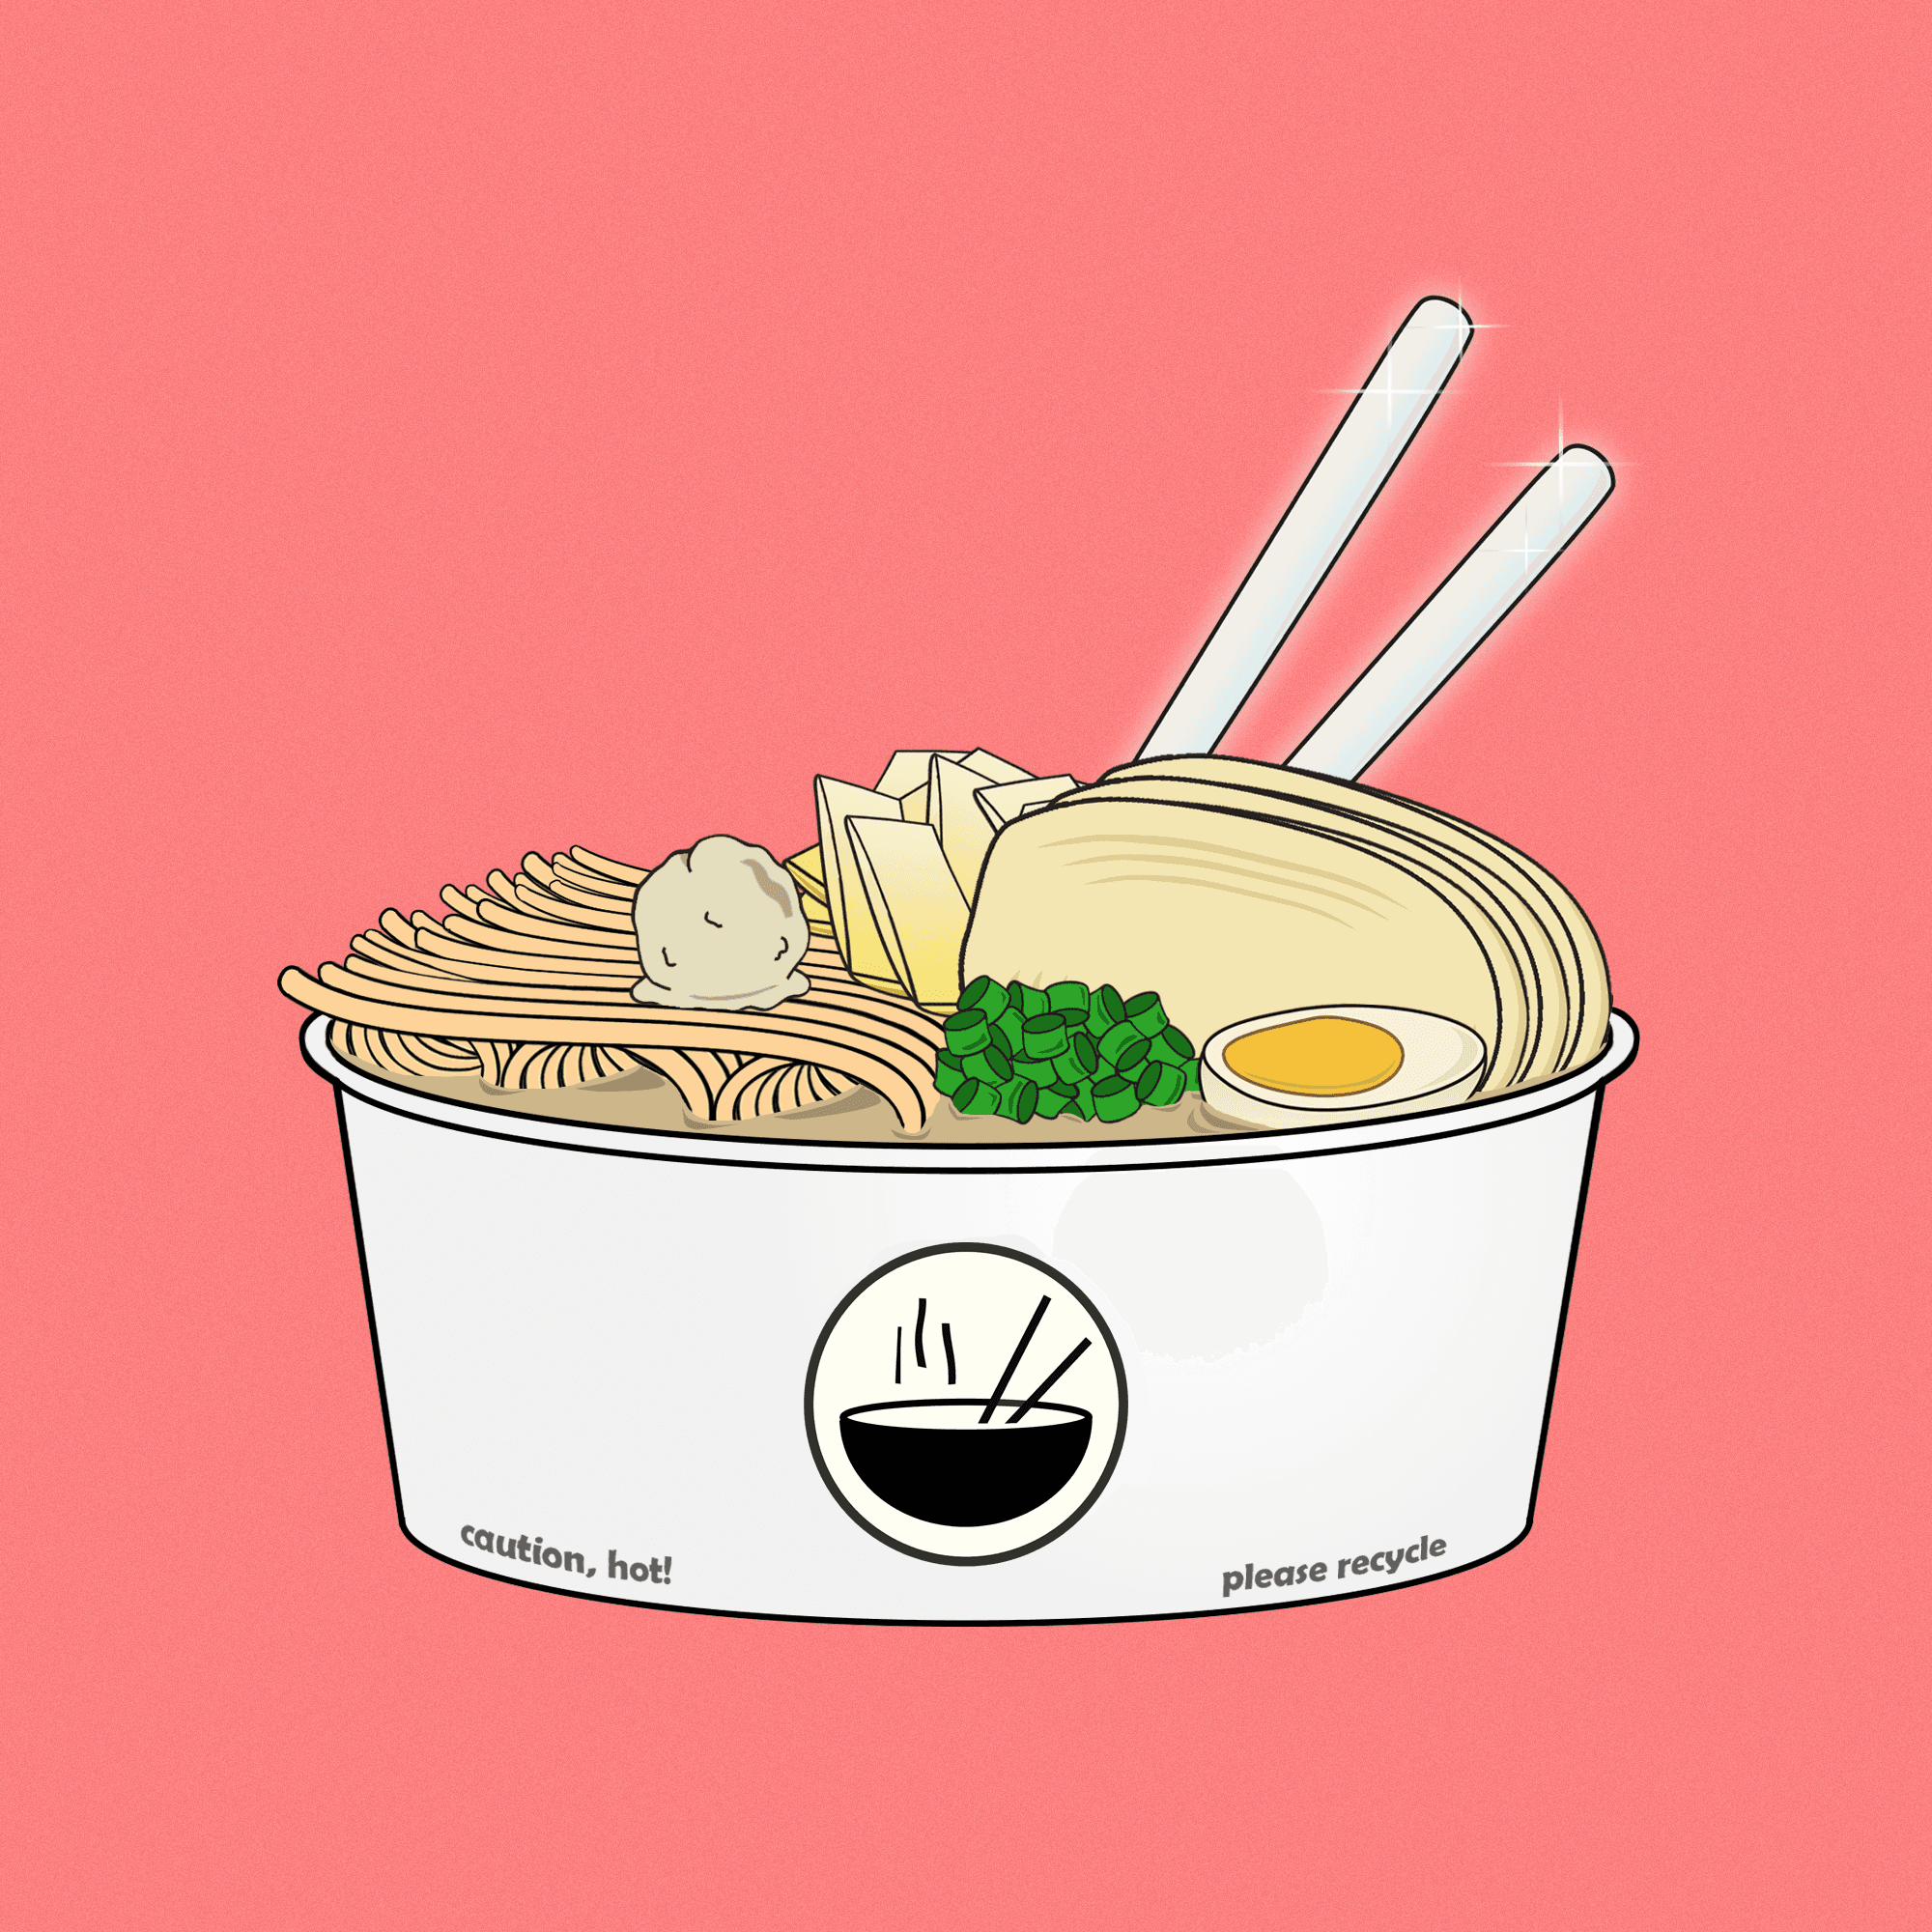 Noodl #57